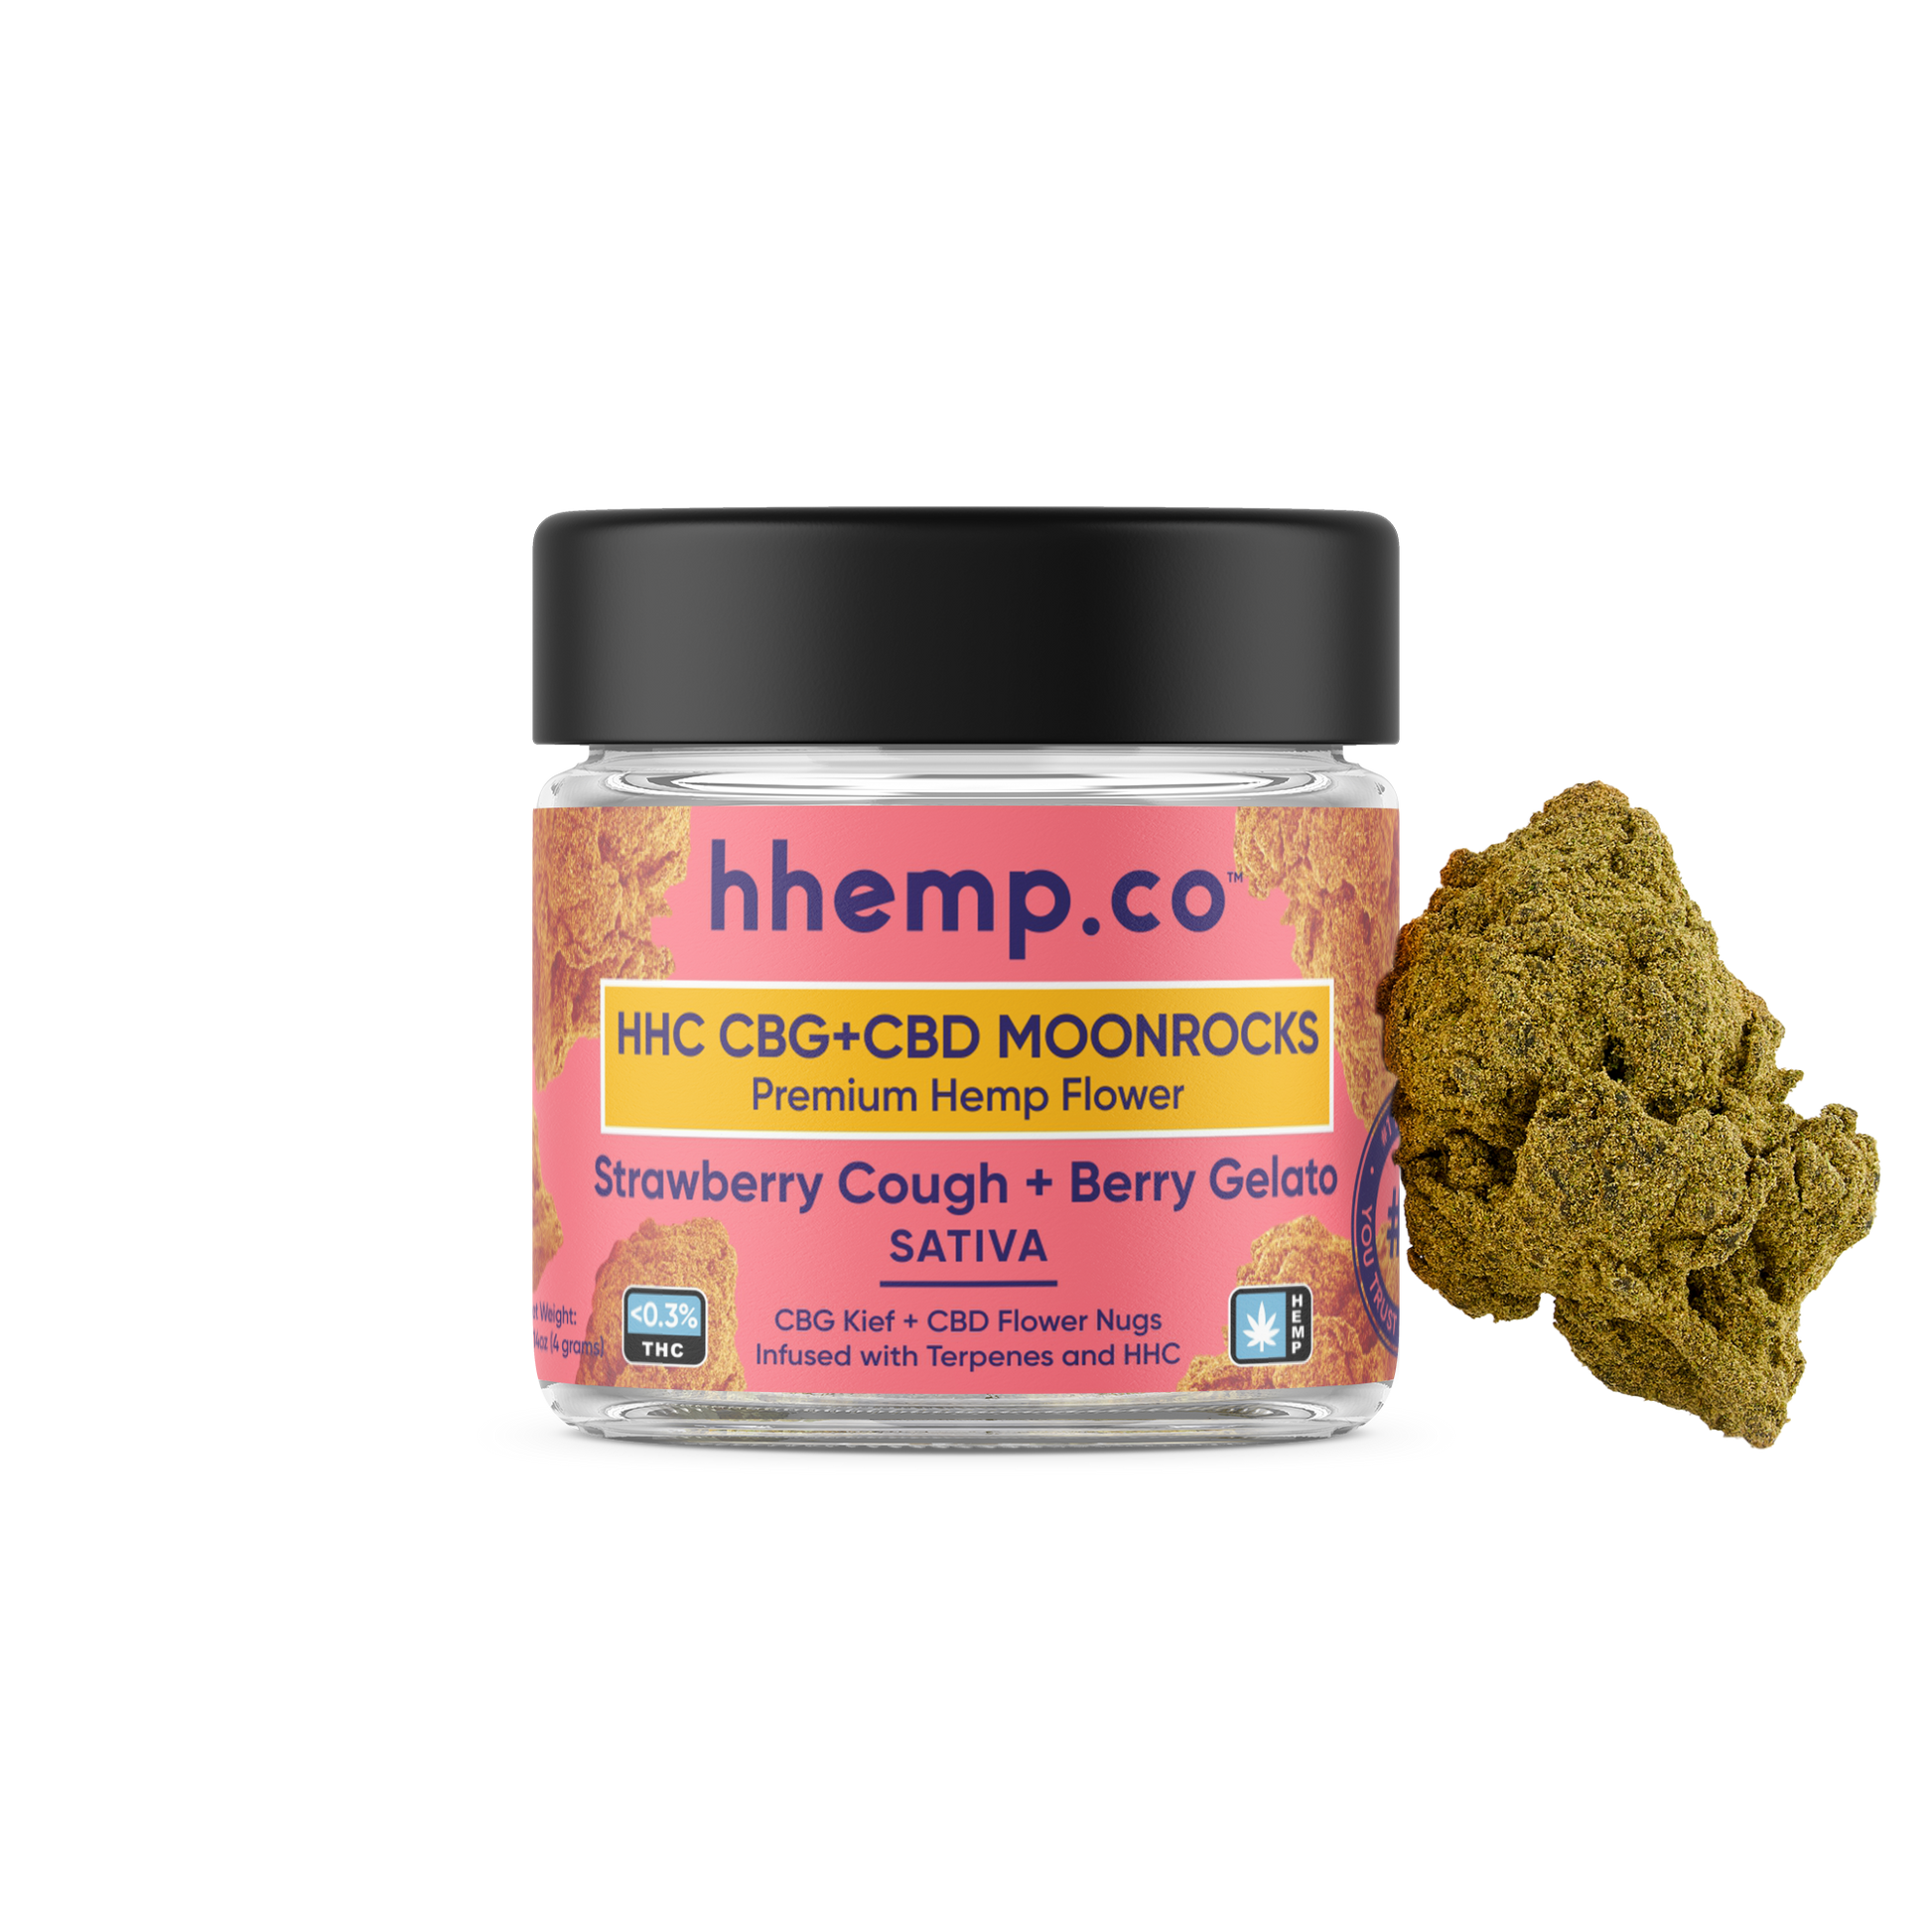 hhemp.co HHC CBG+CBD Moonrocks 4g Flower Jar - Unit - hhemp.co Wholesale 